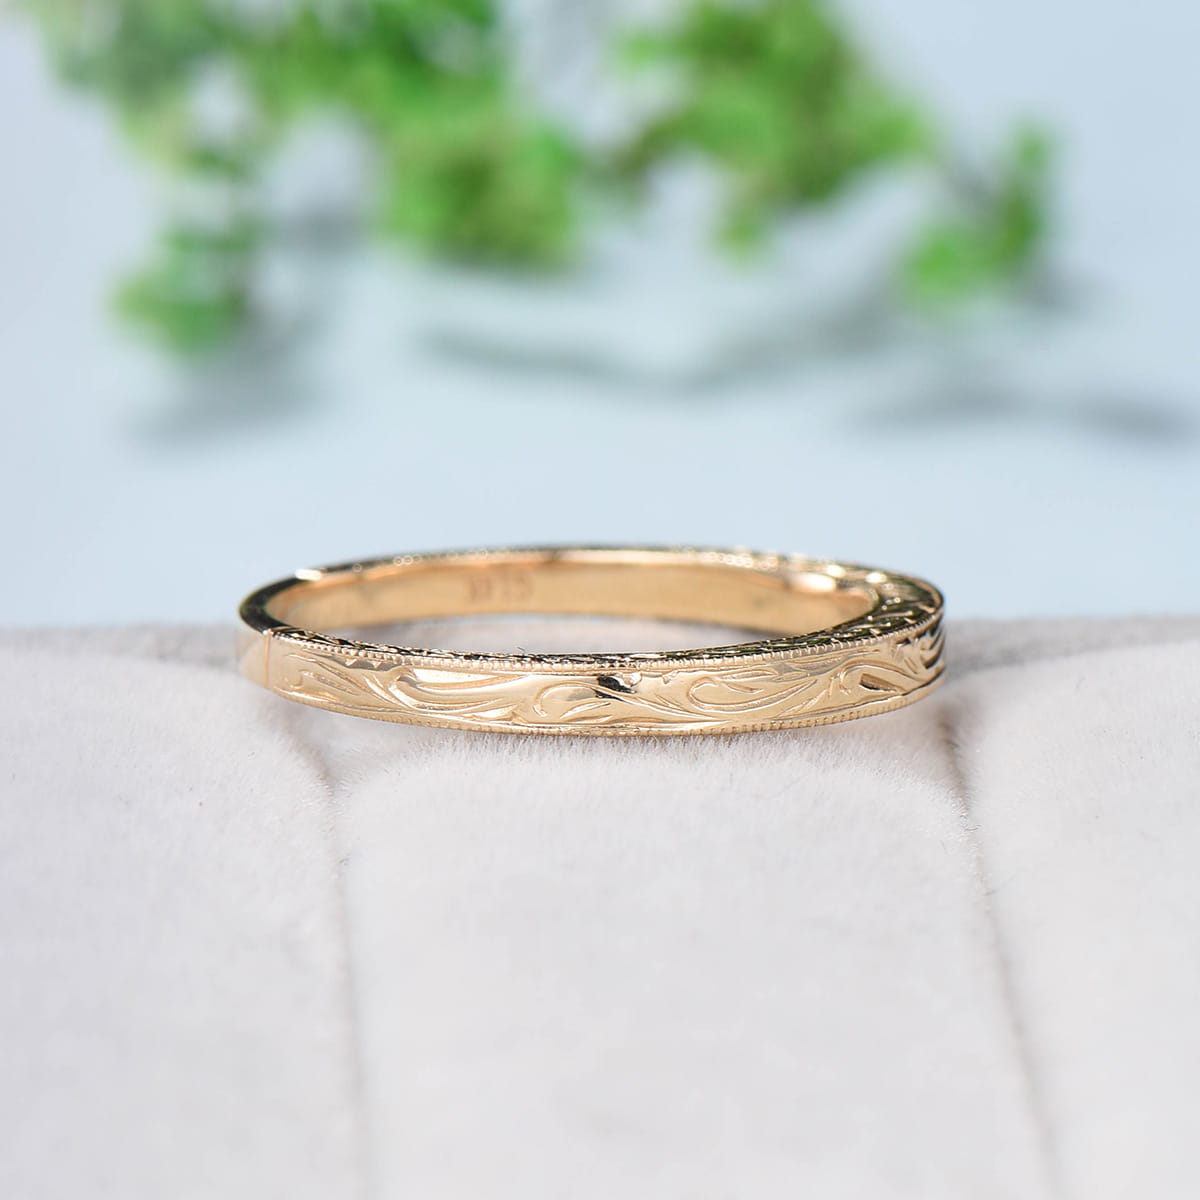 Solid 14k Plain Yellow Gold Wedding Ring Filigree Milgrain Edge Wedding Band Women Floral Design Stacking Retro Vintage Anniversary Ring - PENFINE